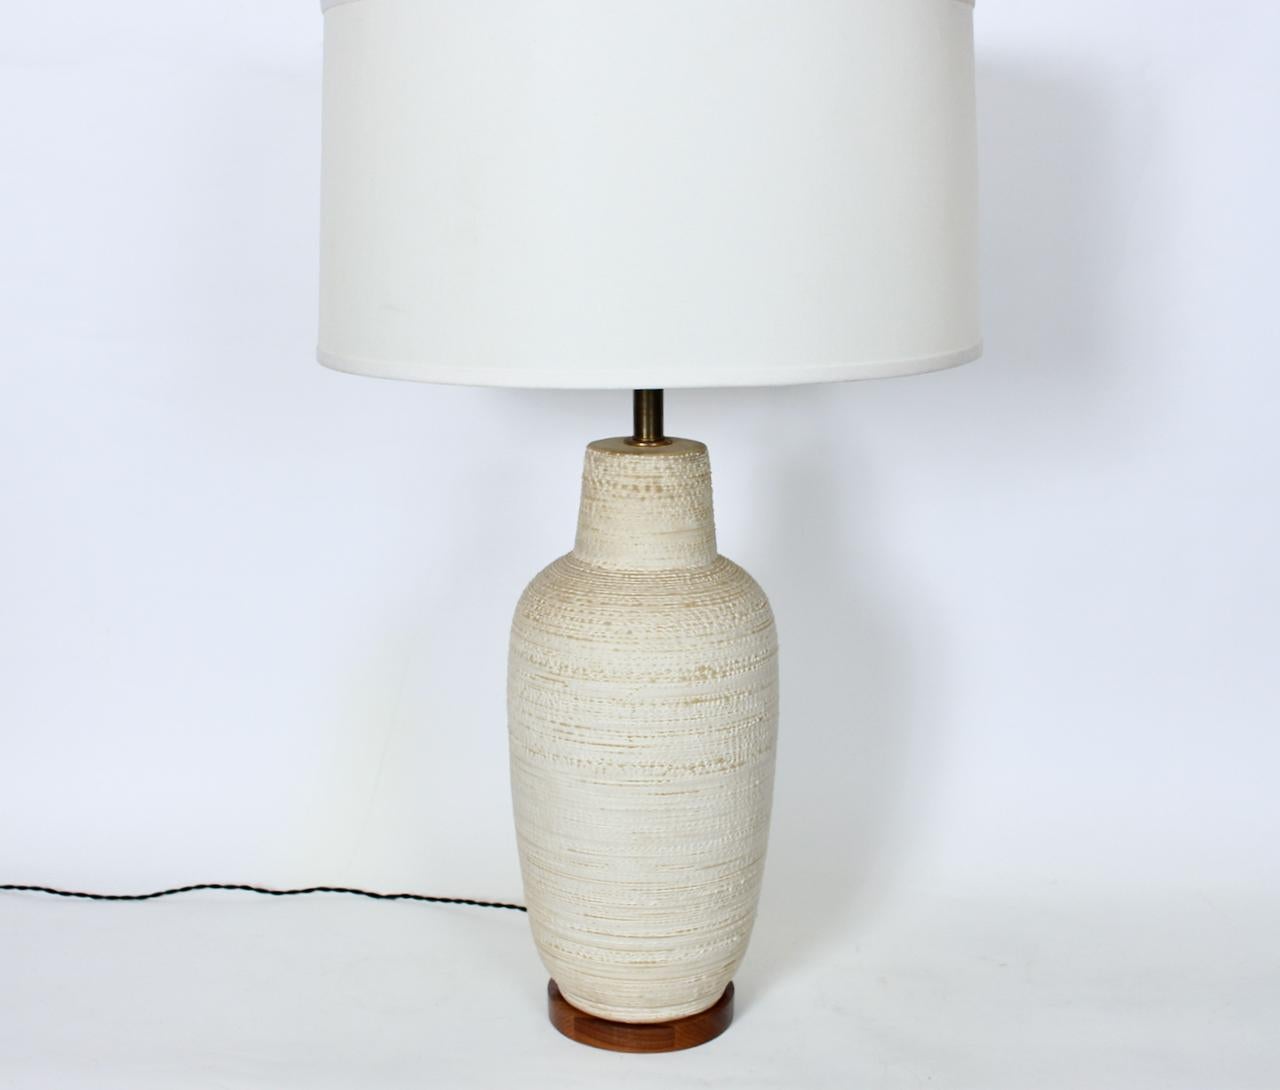 Substantial Design-Technics Cream Glaze Textured Pottery Table Lamp, 1950's For Sale 11